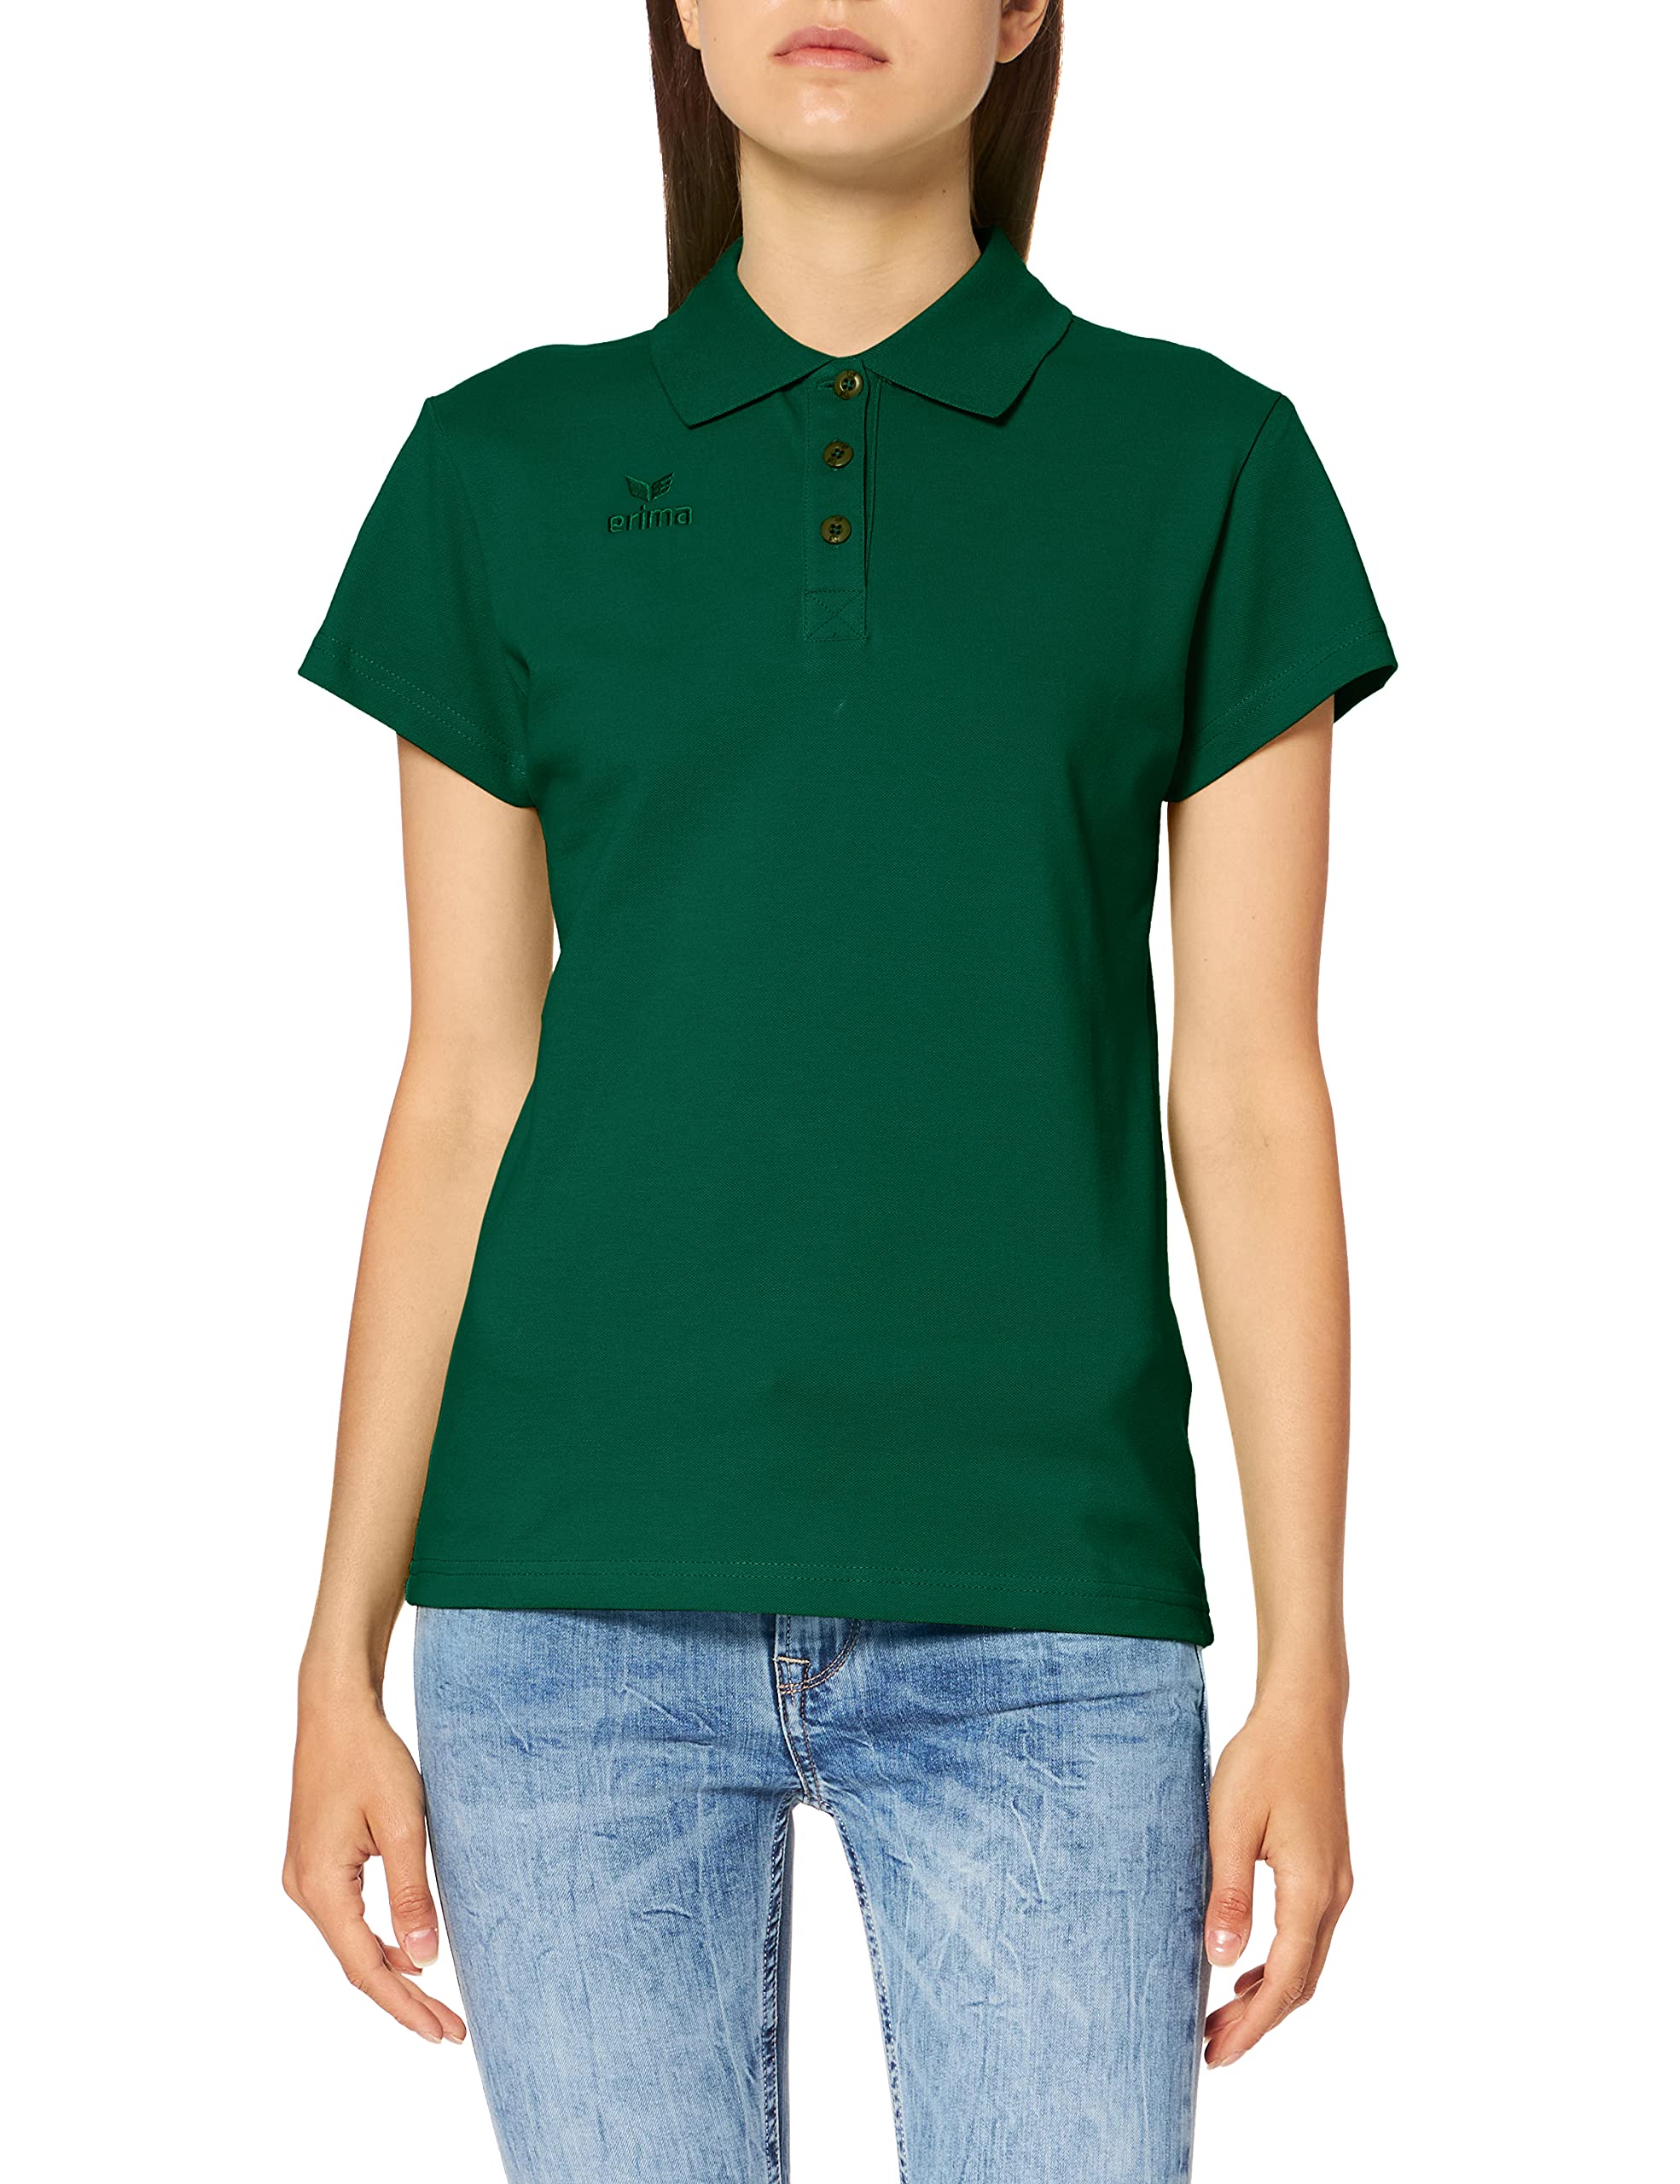 erima Herren Poloshirt Teamsport, smaragd, XXL, 211334